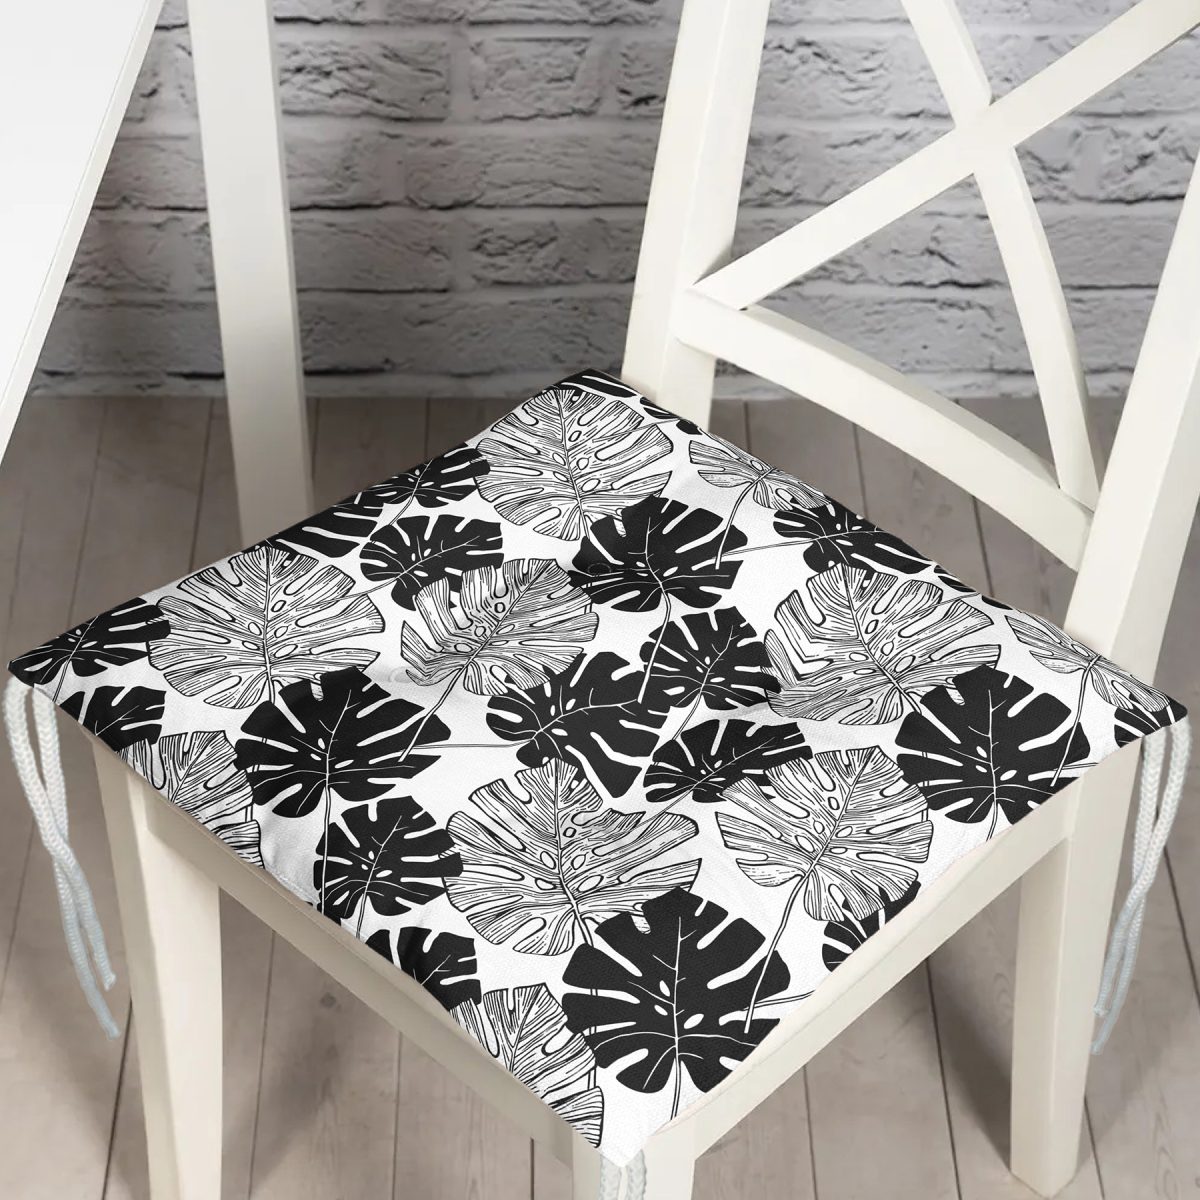 Siyah Ve Beyaz Yaprak Motifli Dekoratif Pofuduk Sandalye Minderi Realhomes